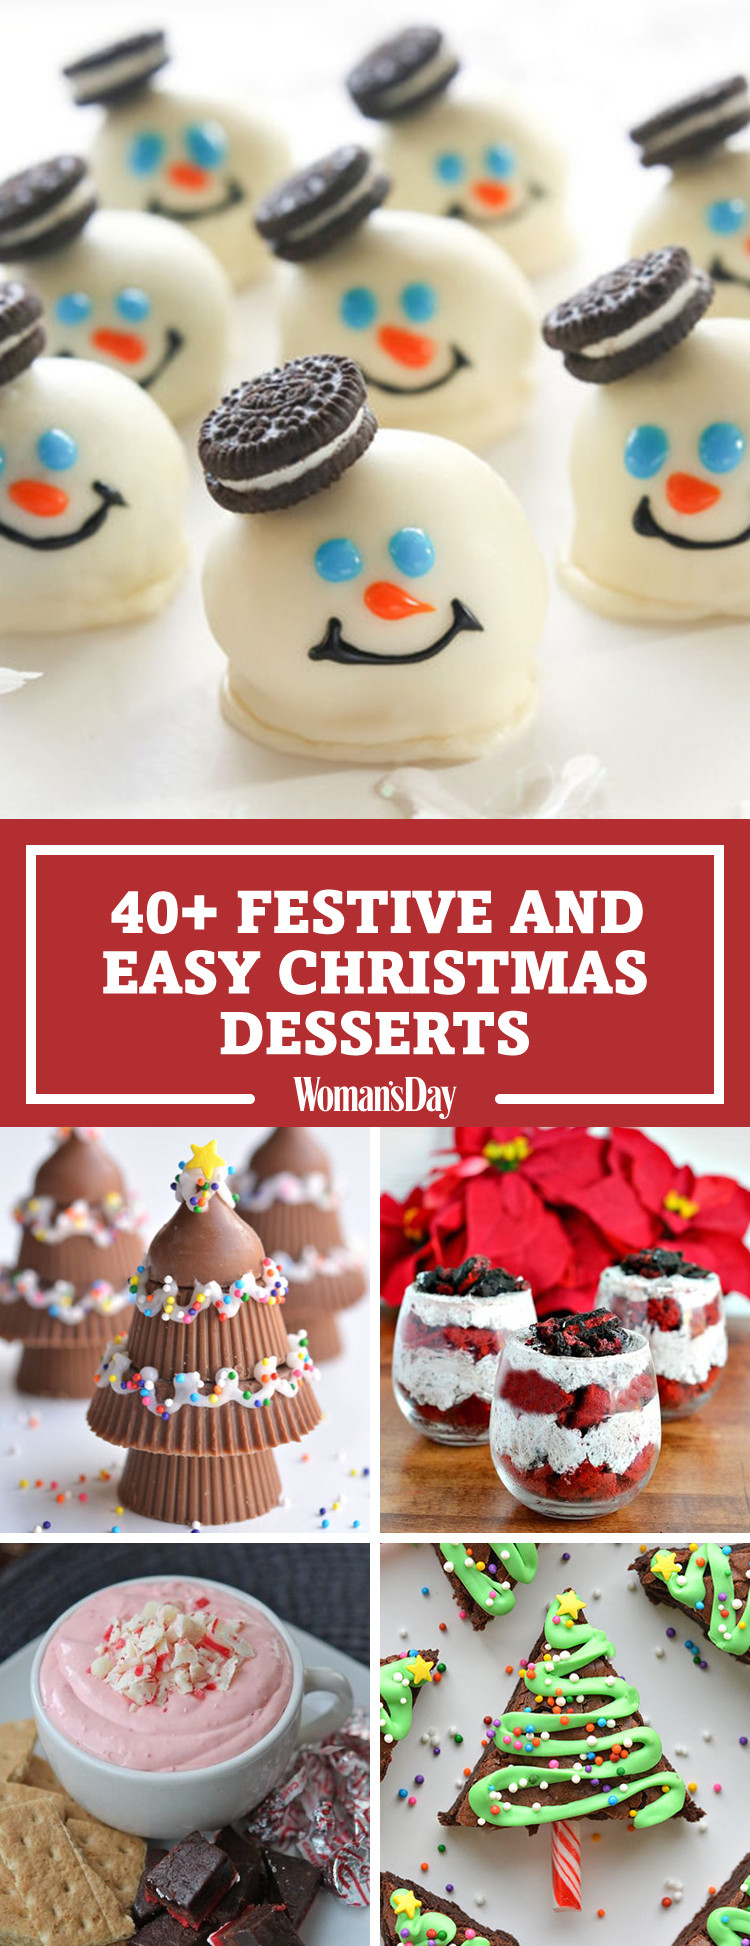 Christmas Desserts Easy
 57 Easy Christmas Dessert Recipes Best Ideas for Fun